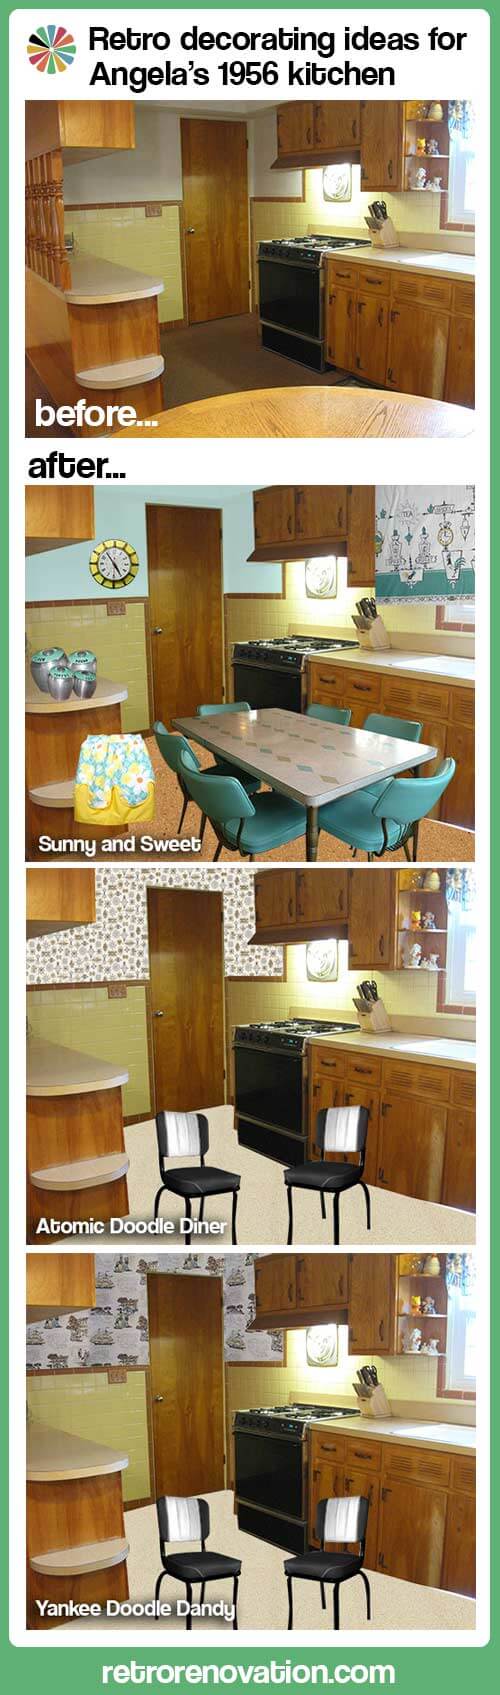 retro decorating ideas 1950s kitchen